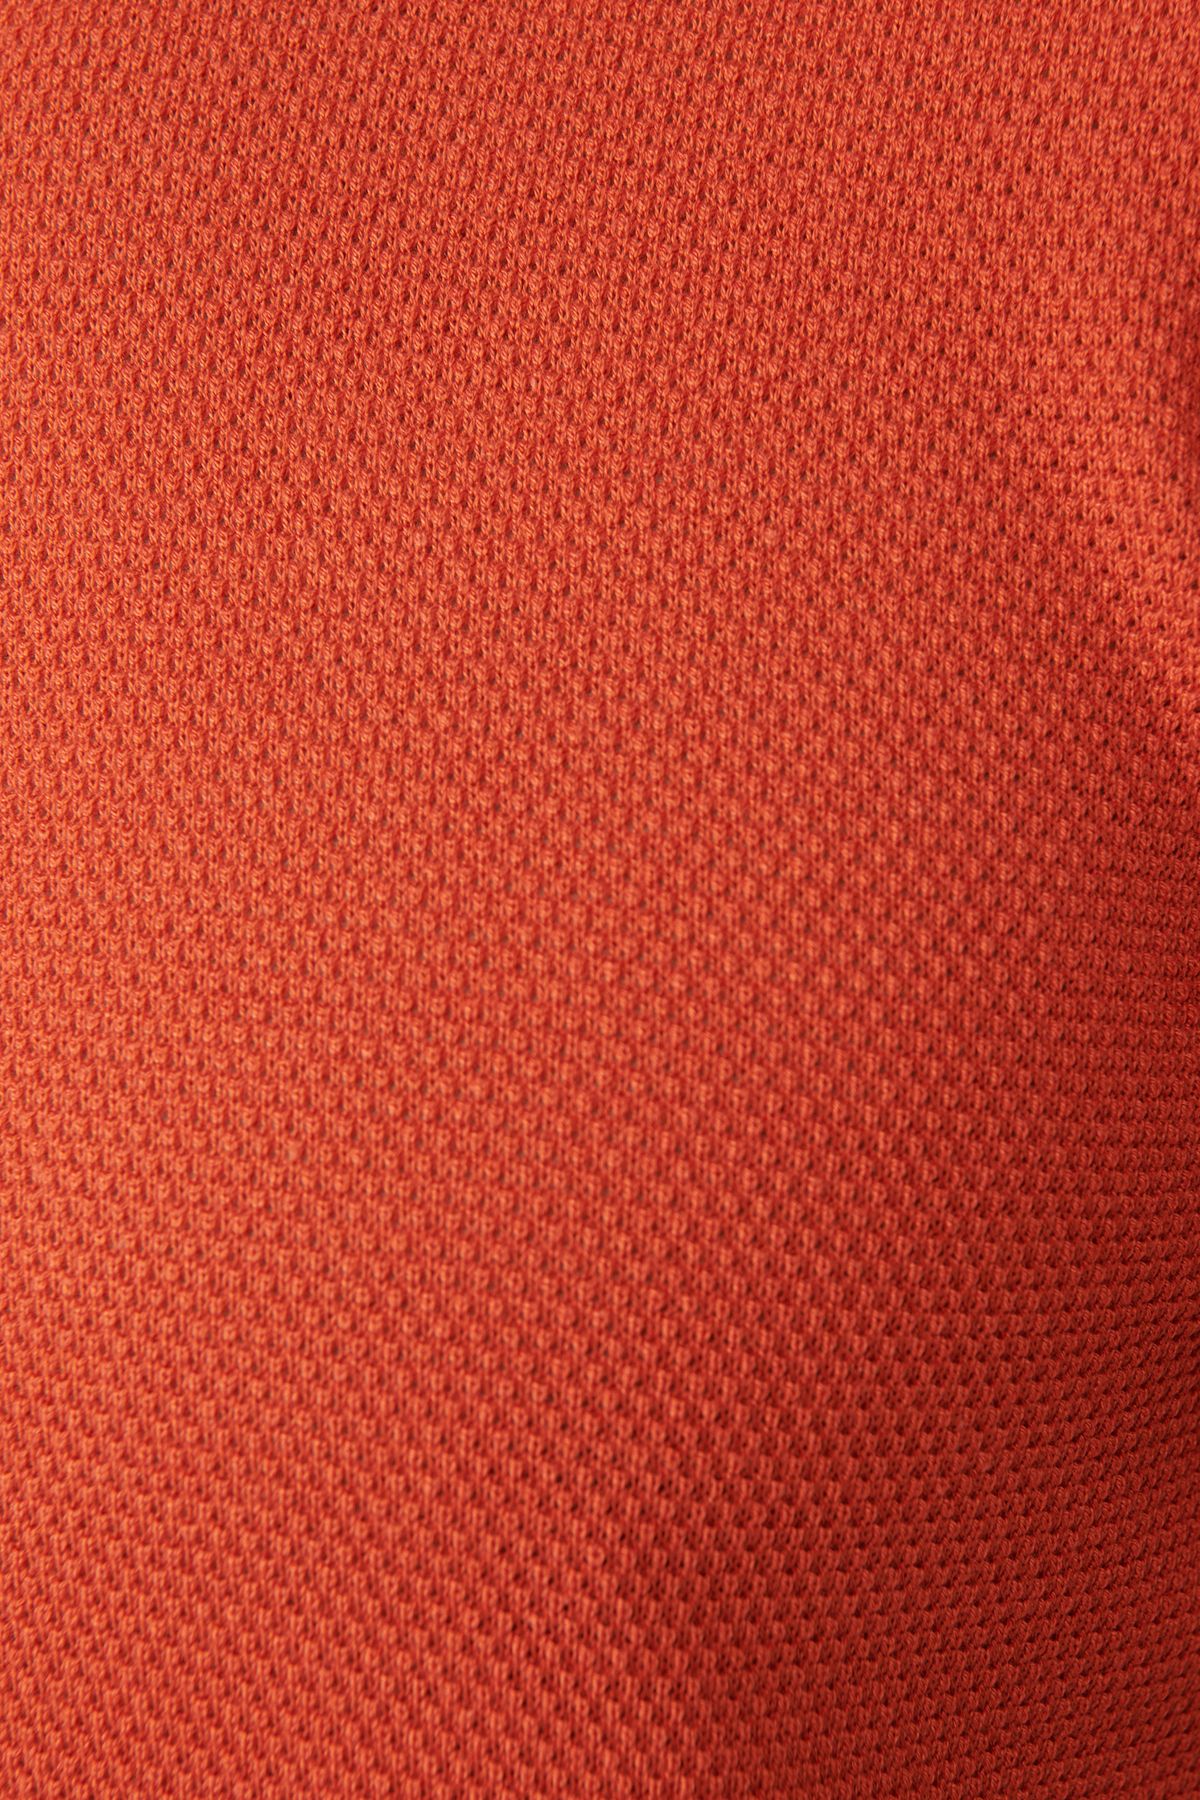 Avva دوچرخه سواری نارنجی پنبه ای به طور منظم پیراهن بافتنی مناسب E005027